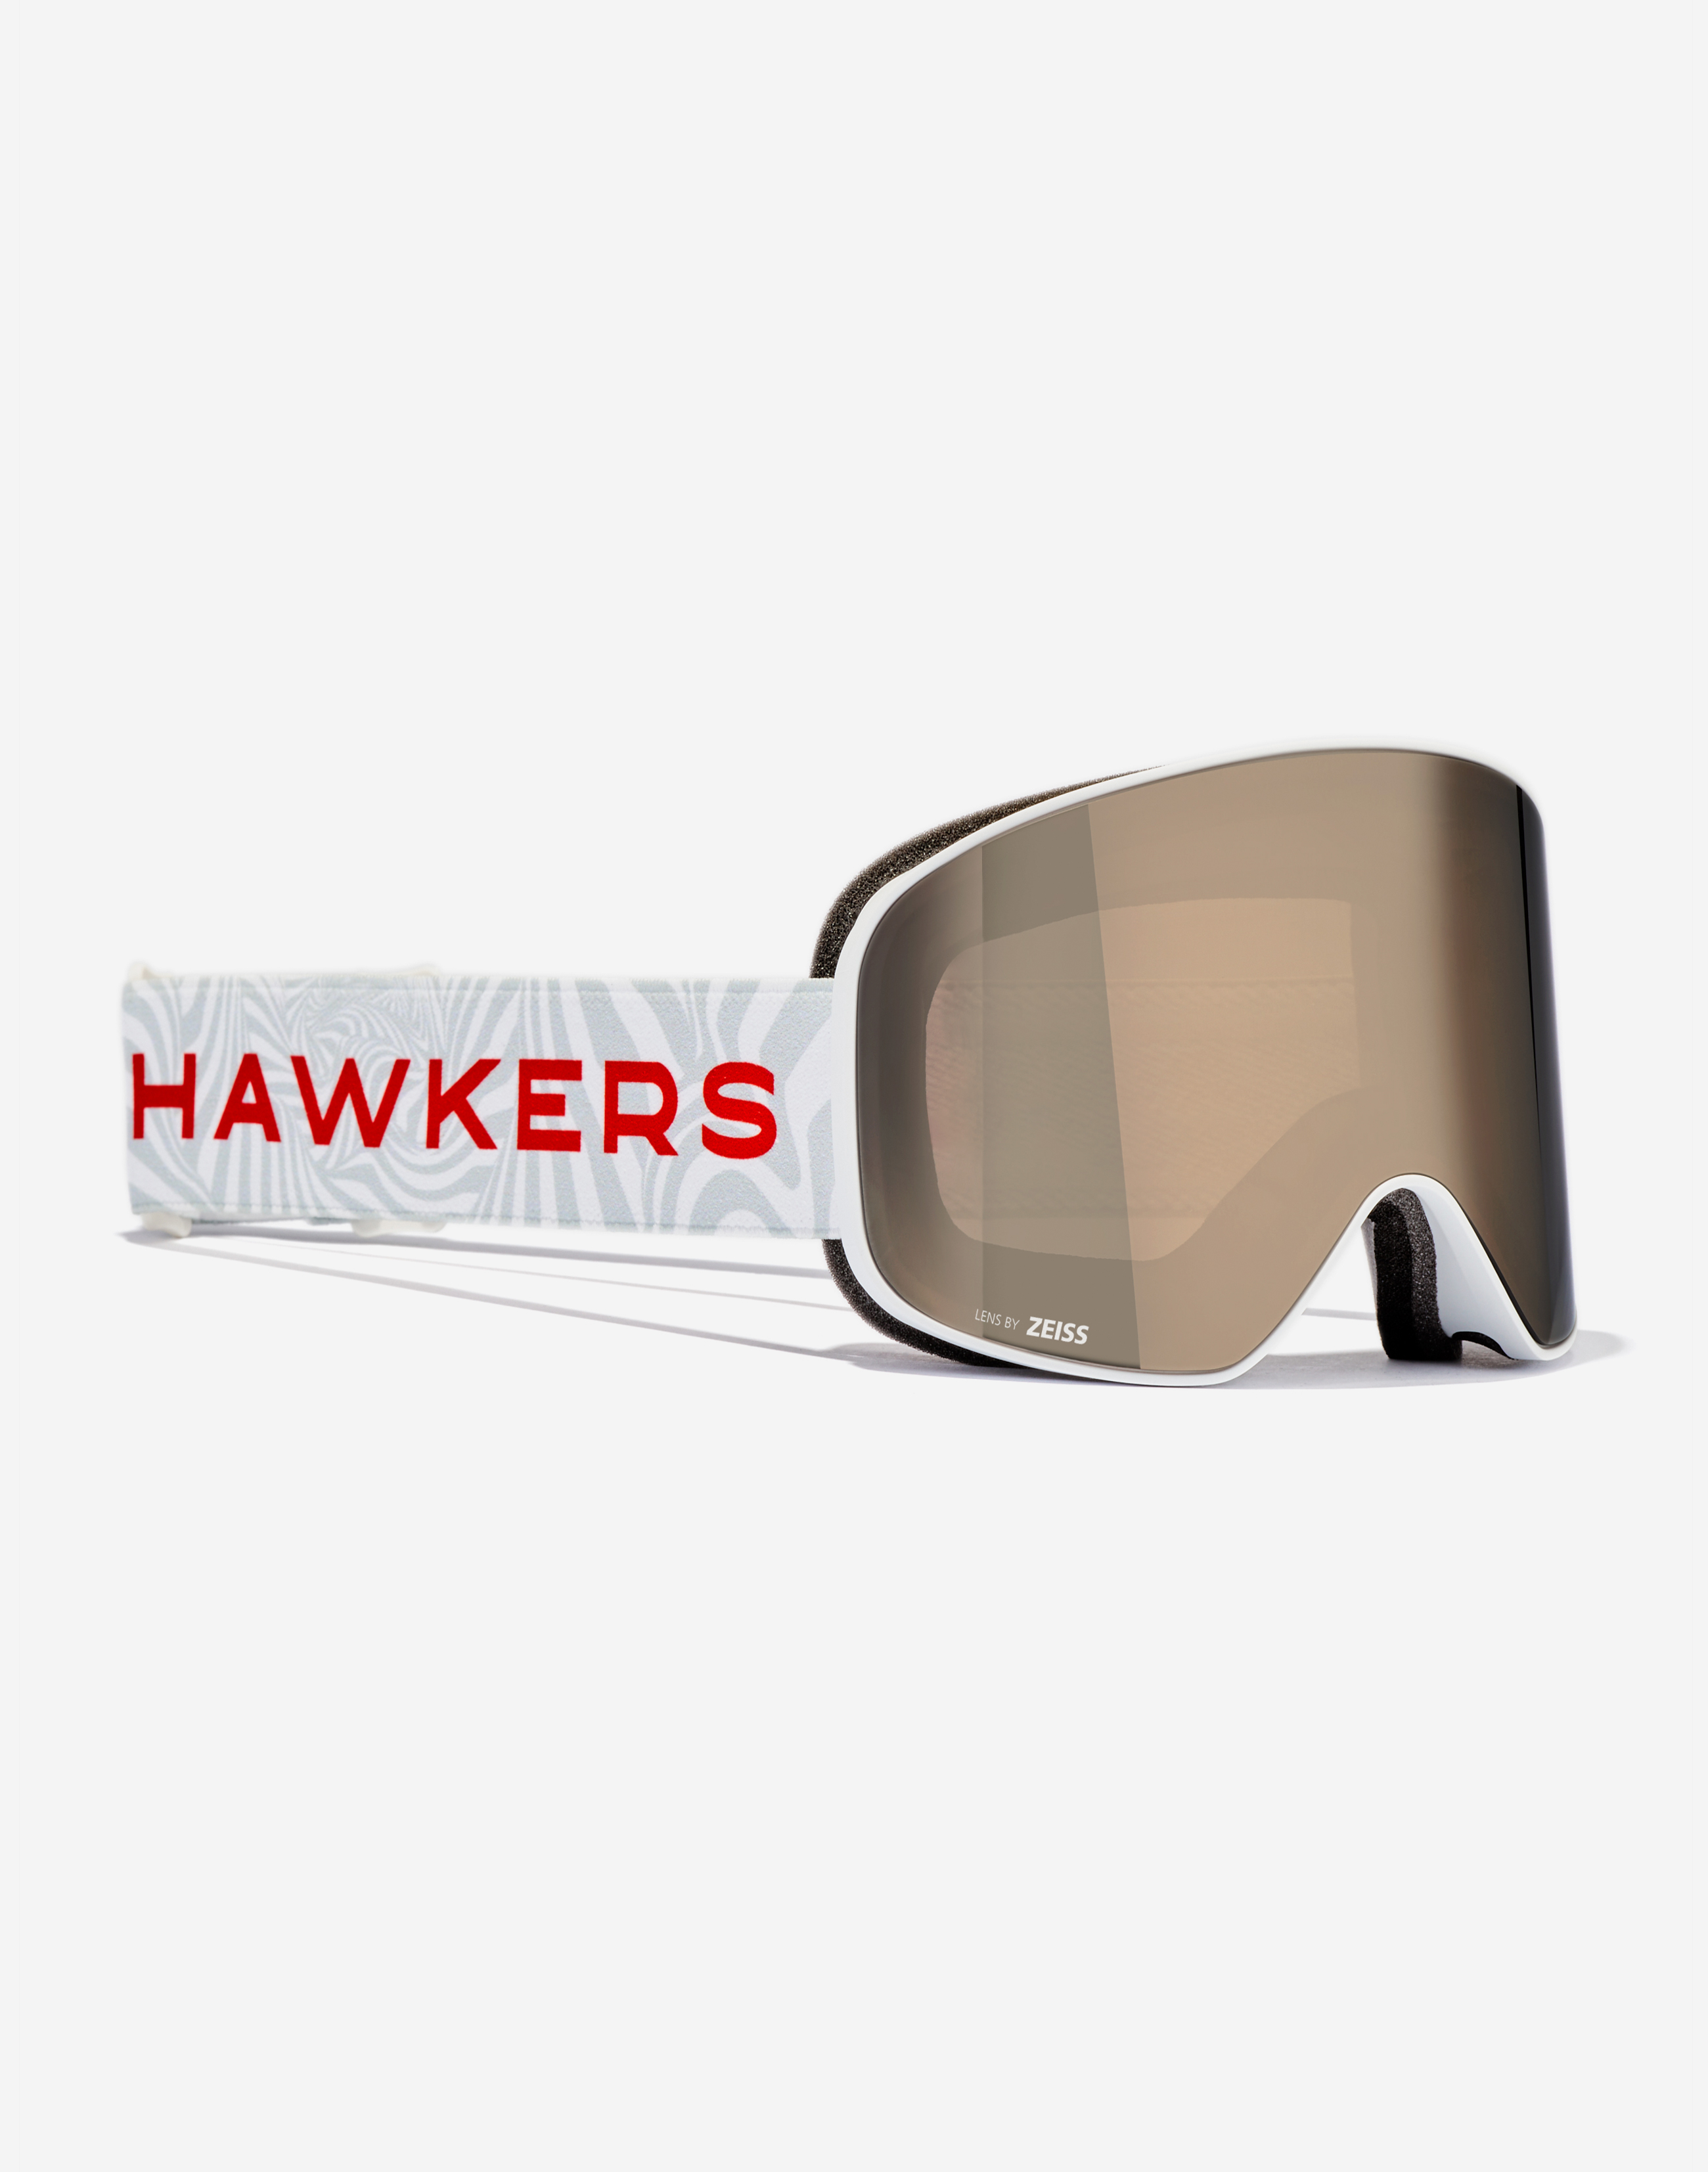 Hawkers HAWKERS X POLIMÁ - ARTIK w375